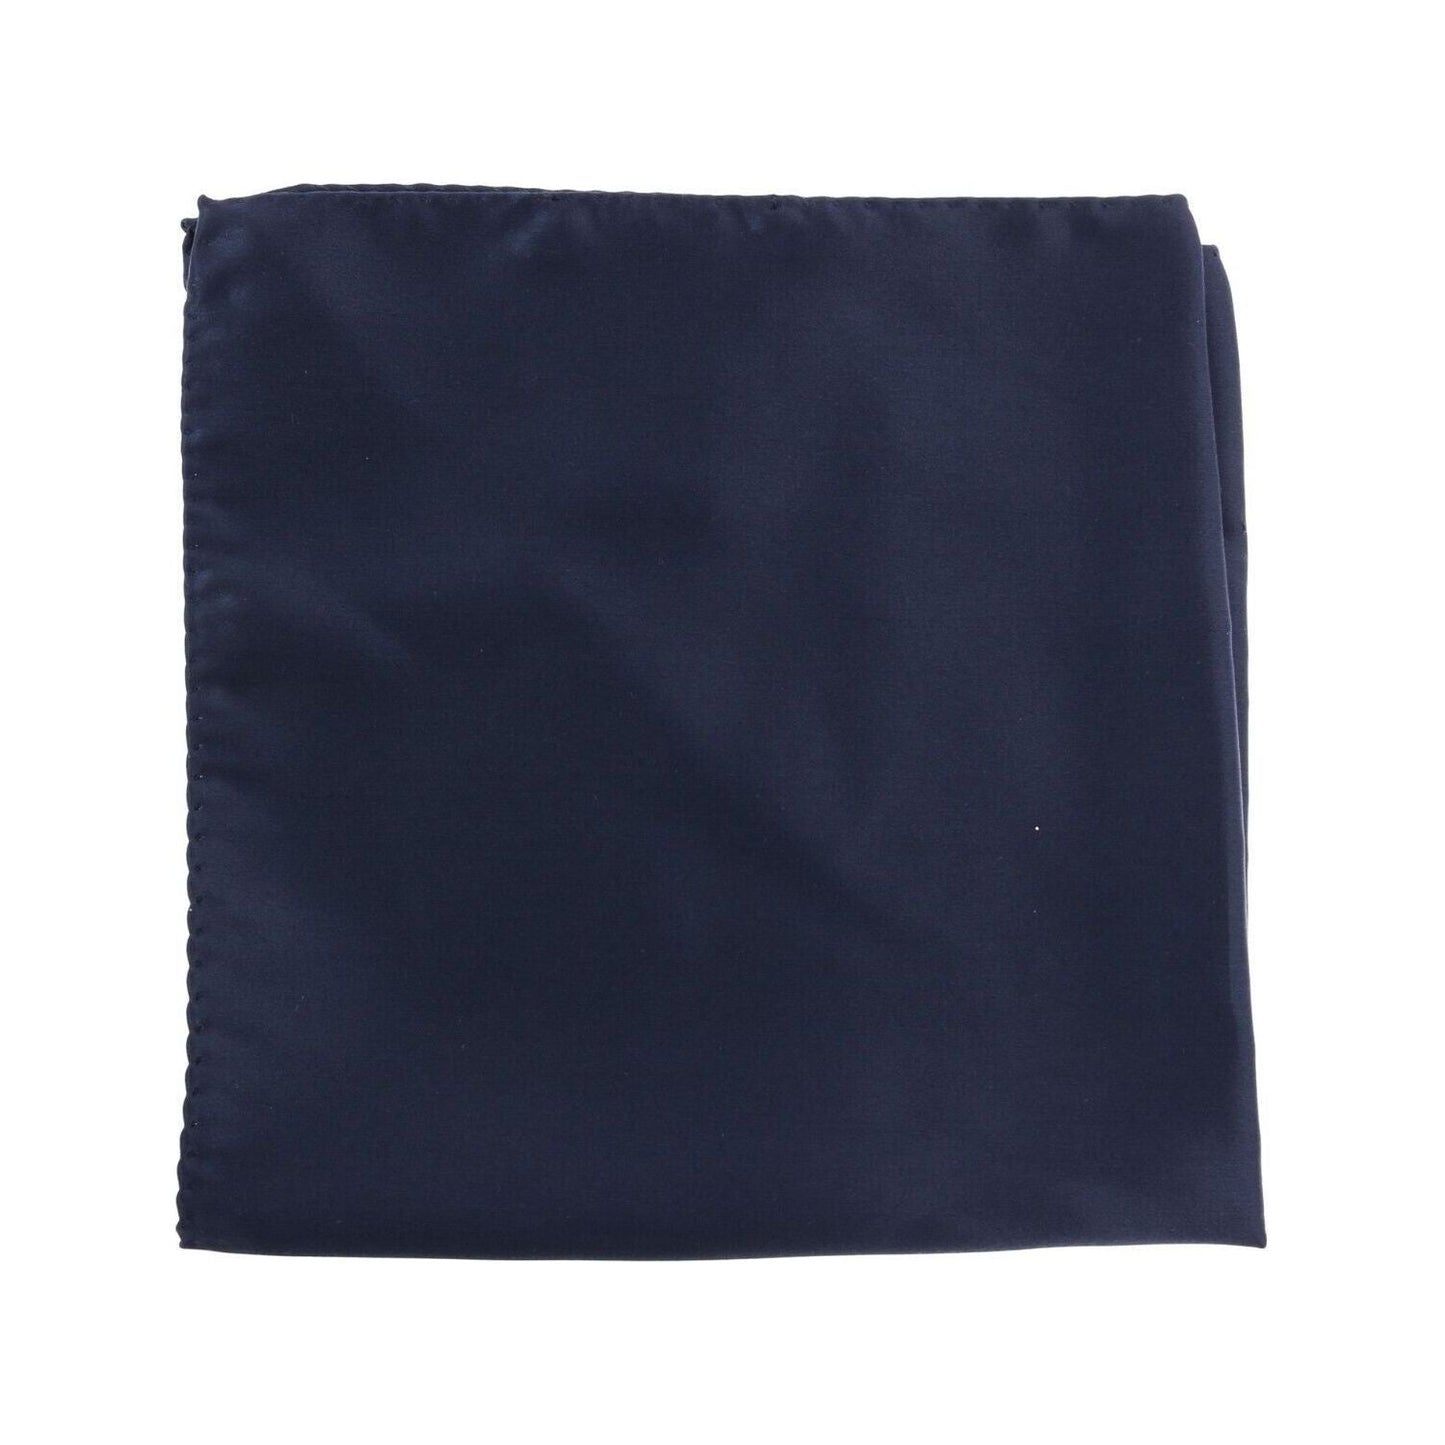 Elegant Silk Pocket Square in Lustrous Blue Dolce & Gabbana